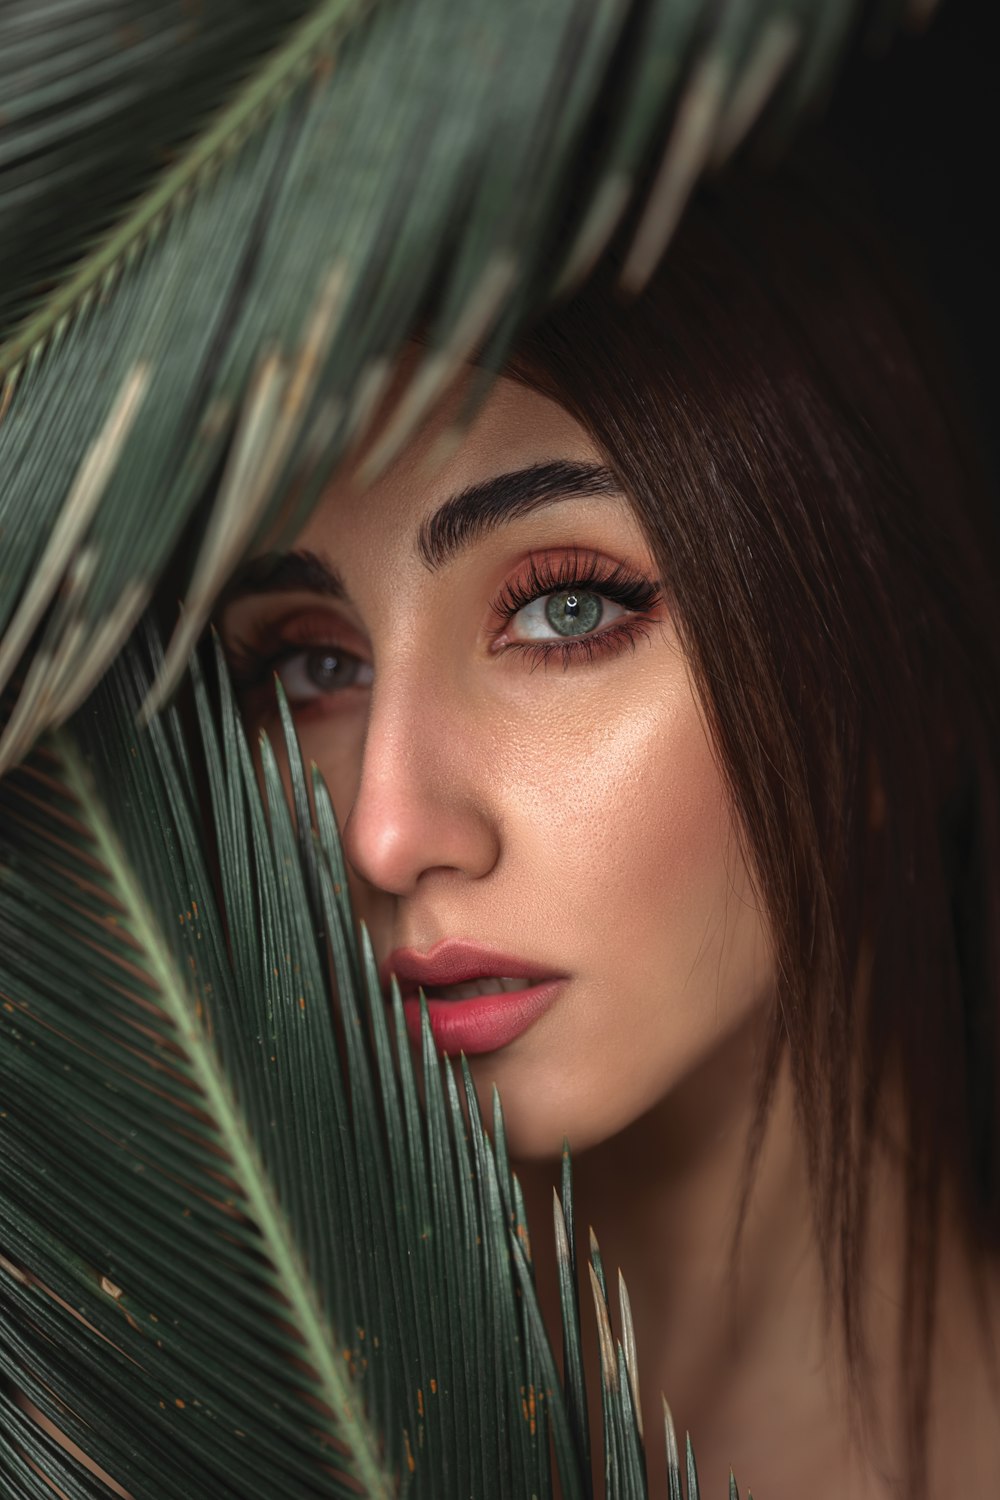 a woman with blue eyes hiding behind a palm leaf